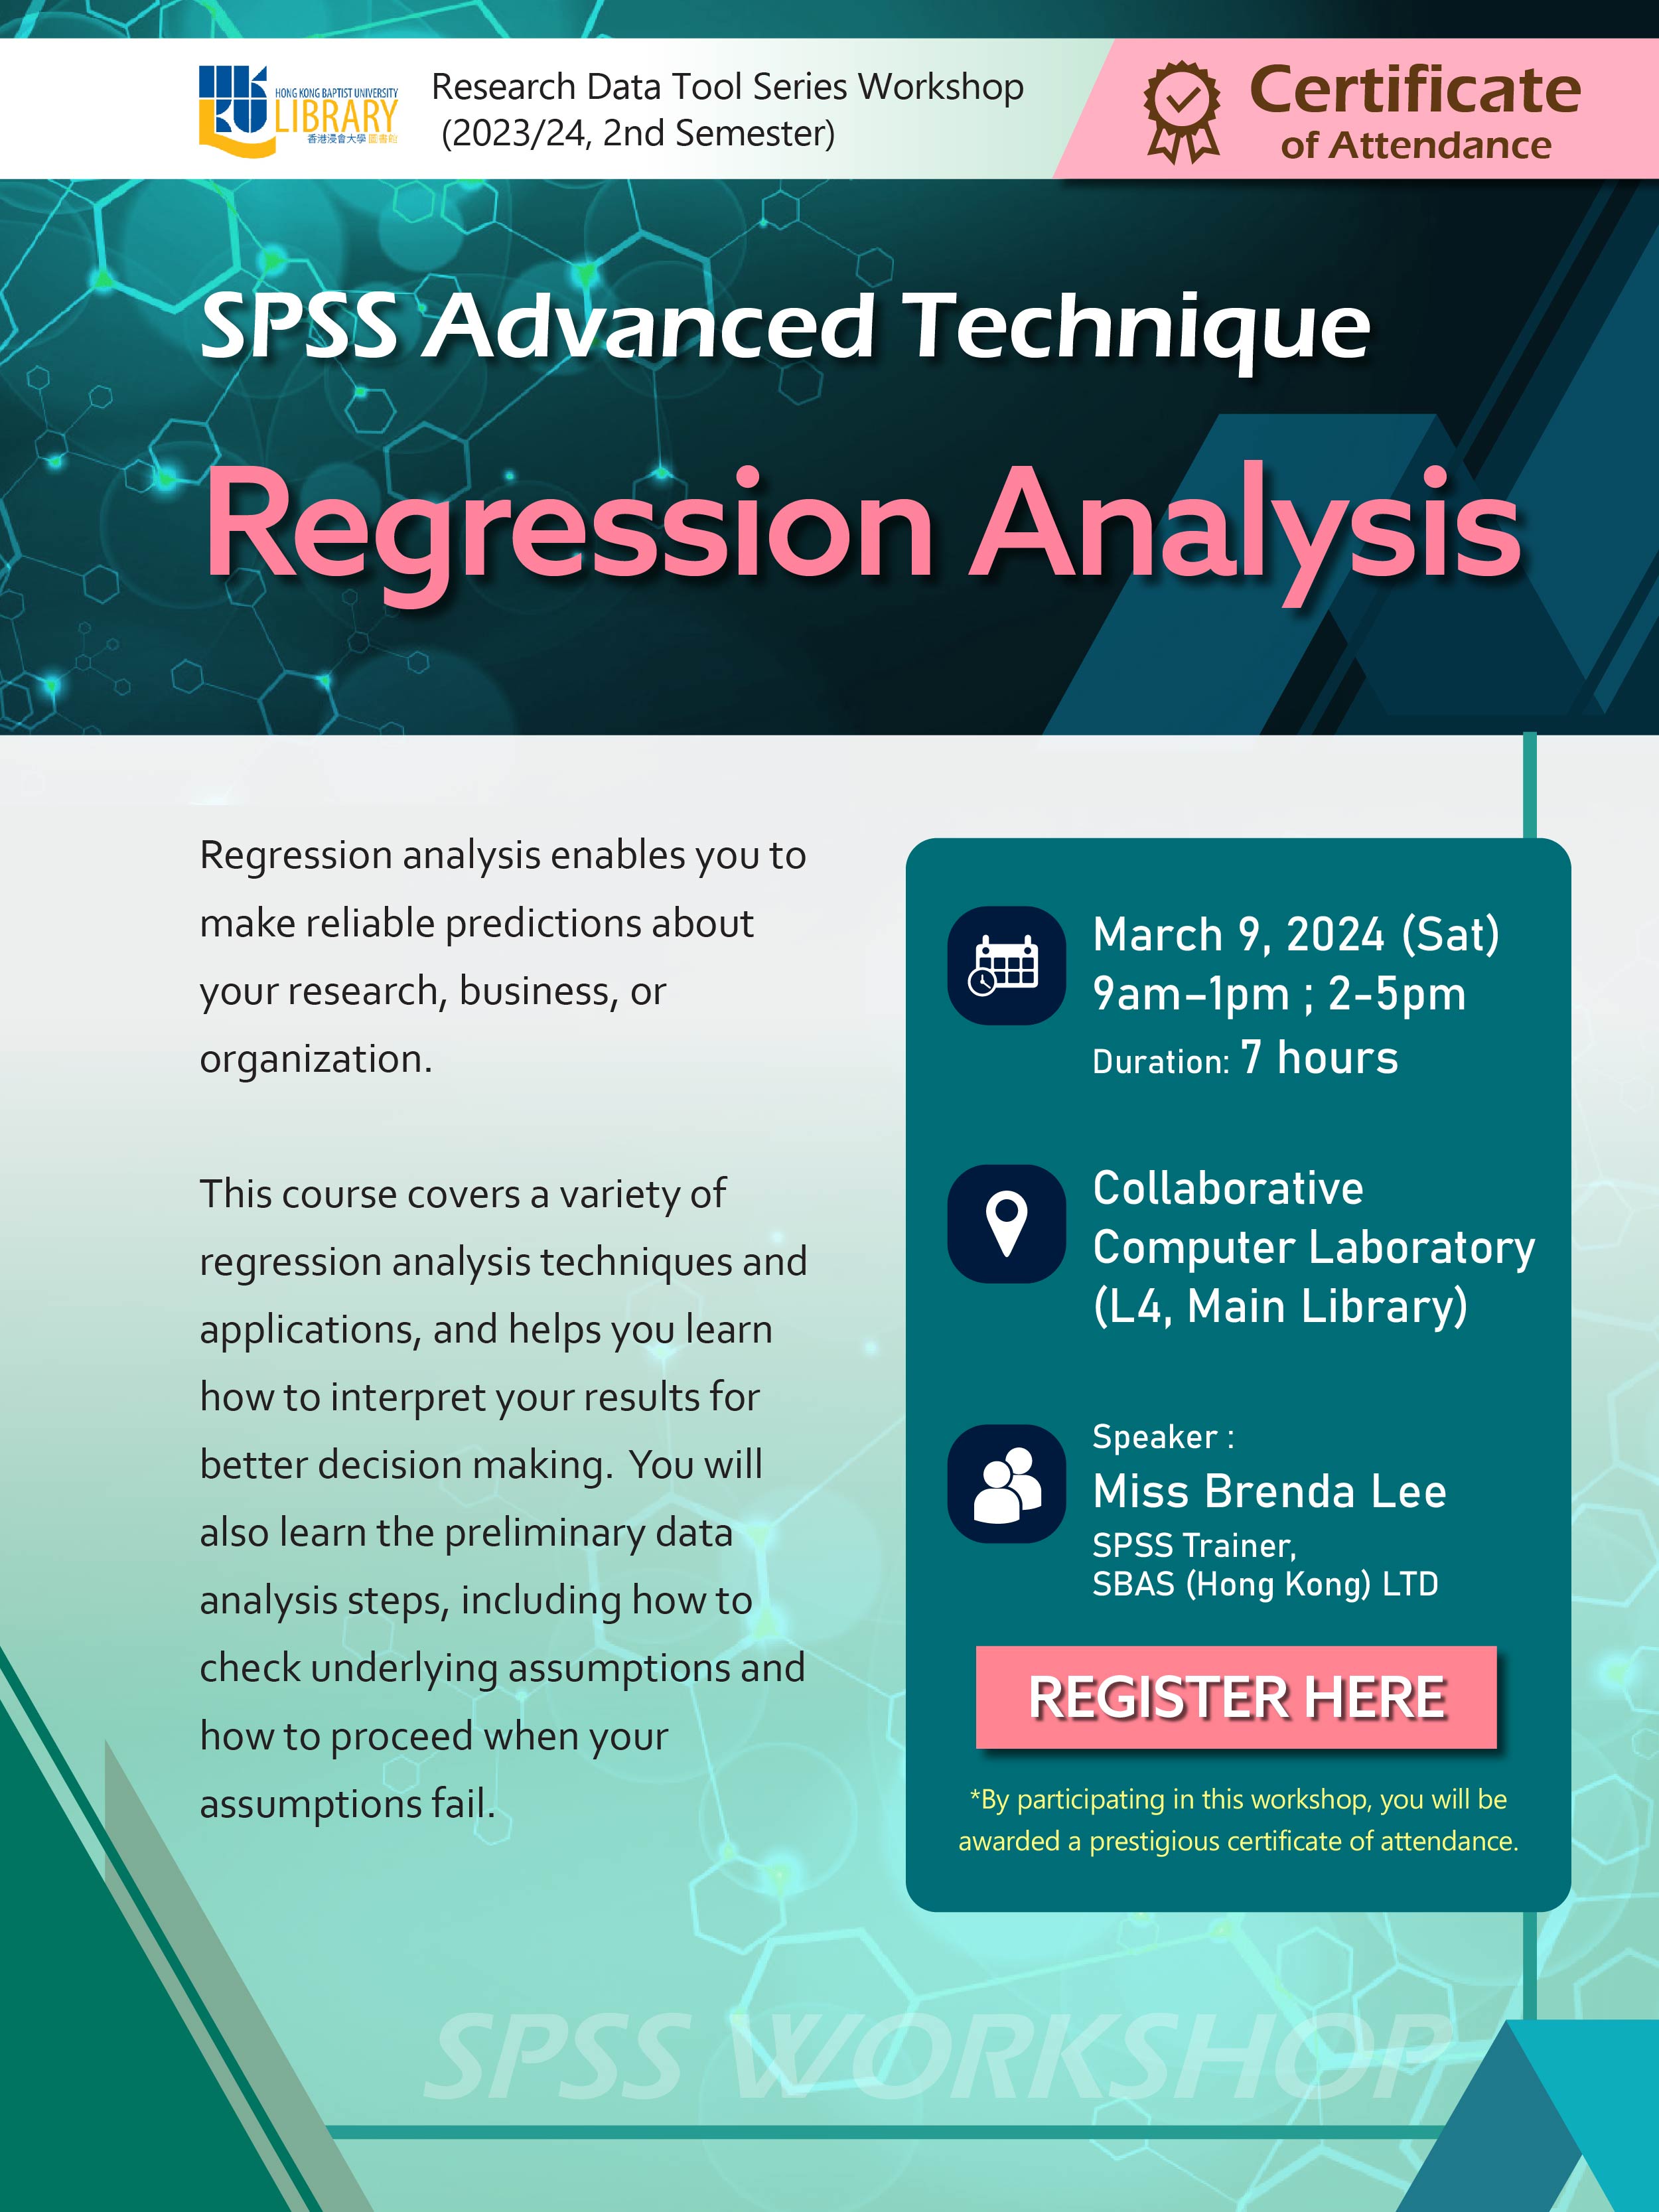 SPSS Advanced Technique: Regression Analysis